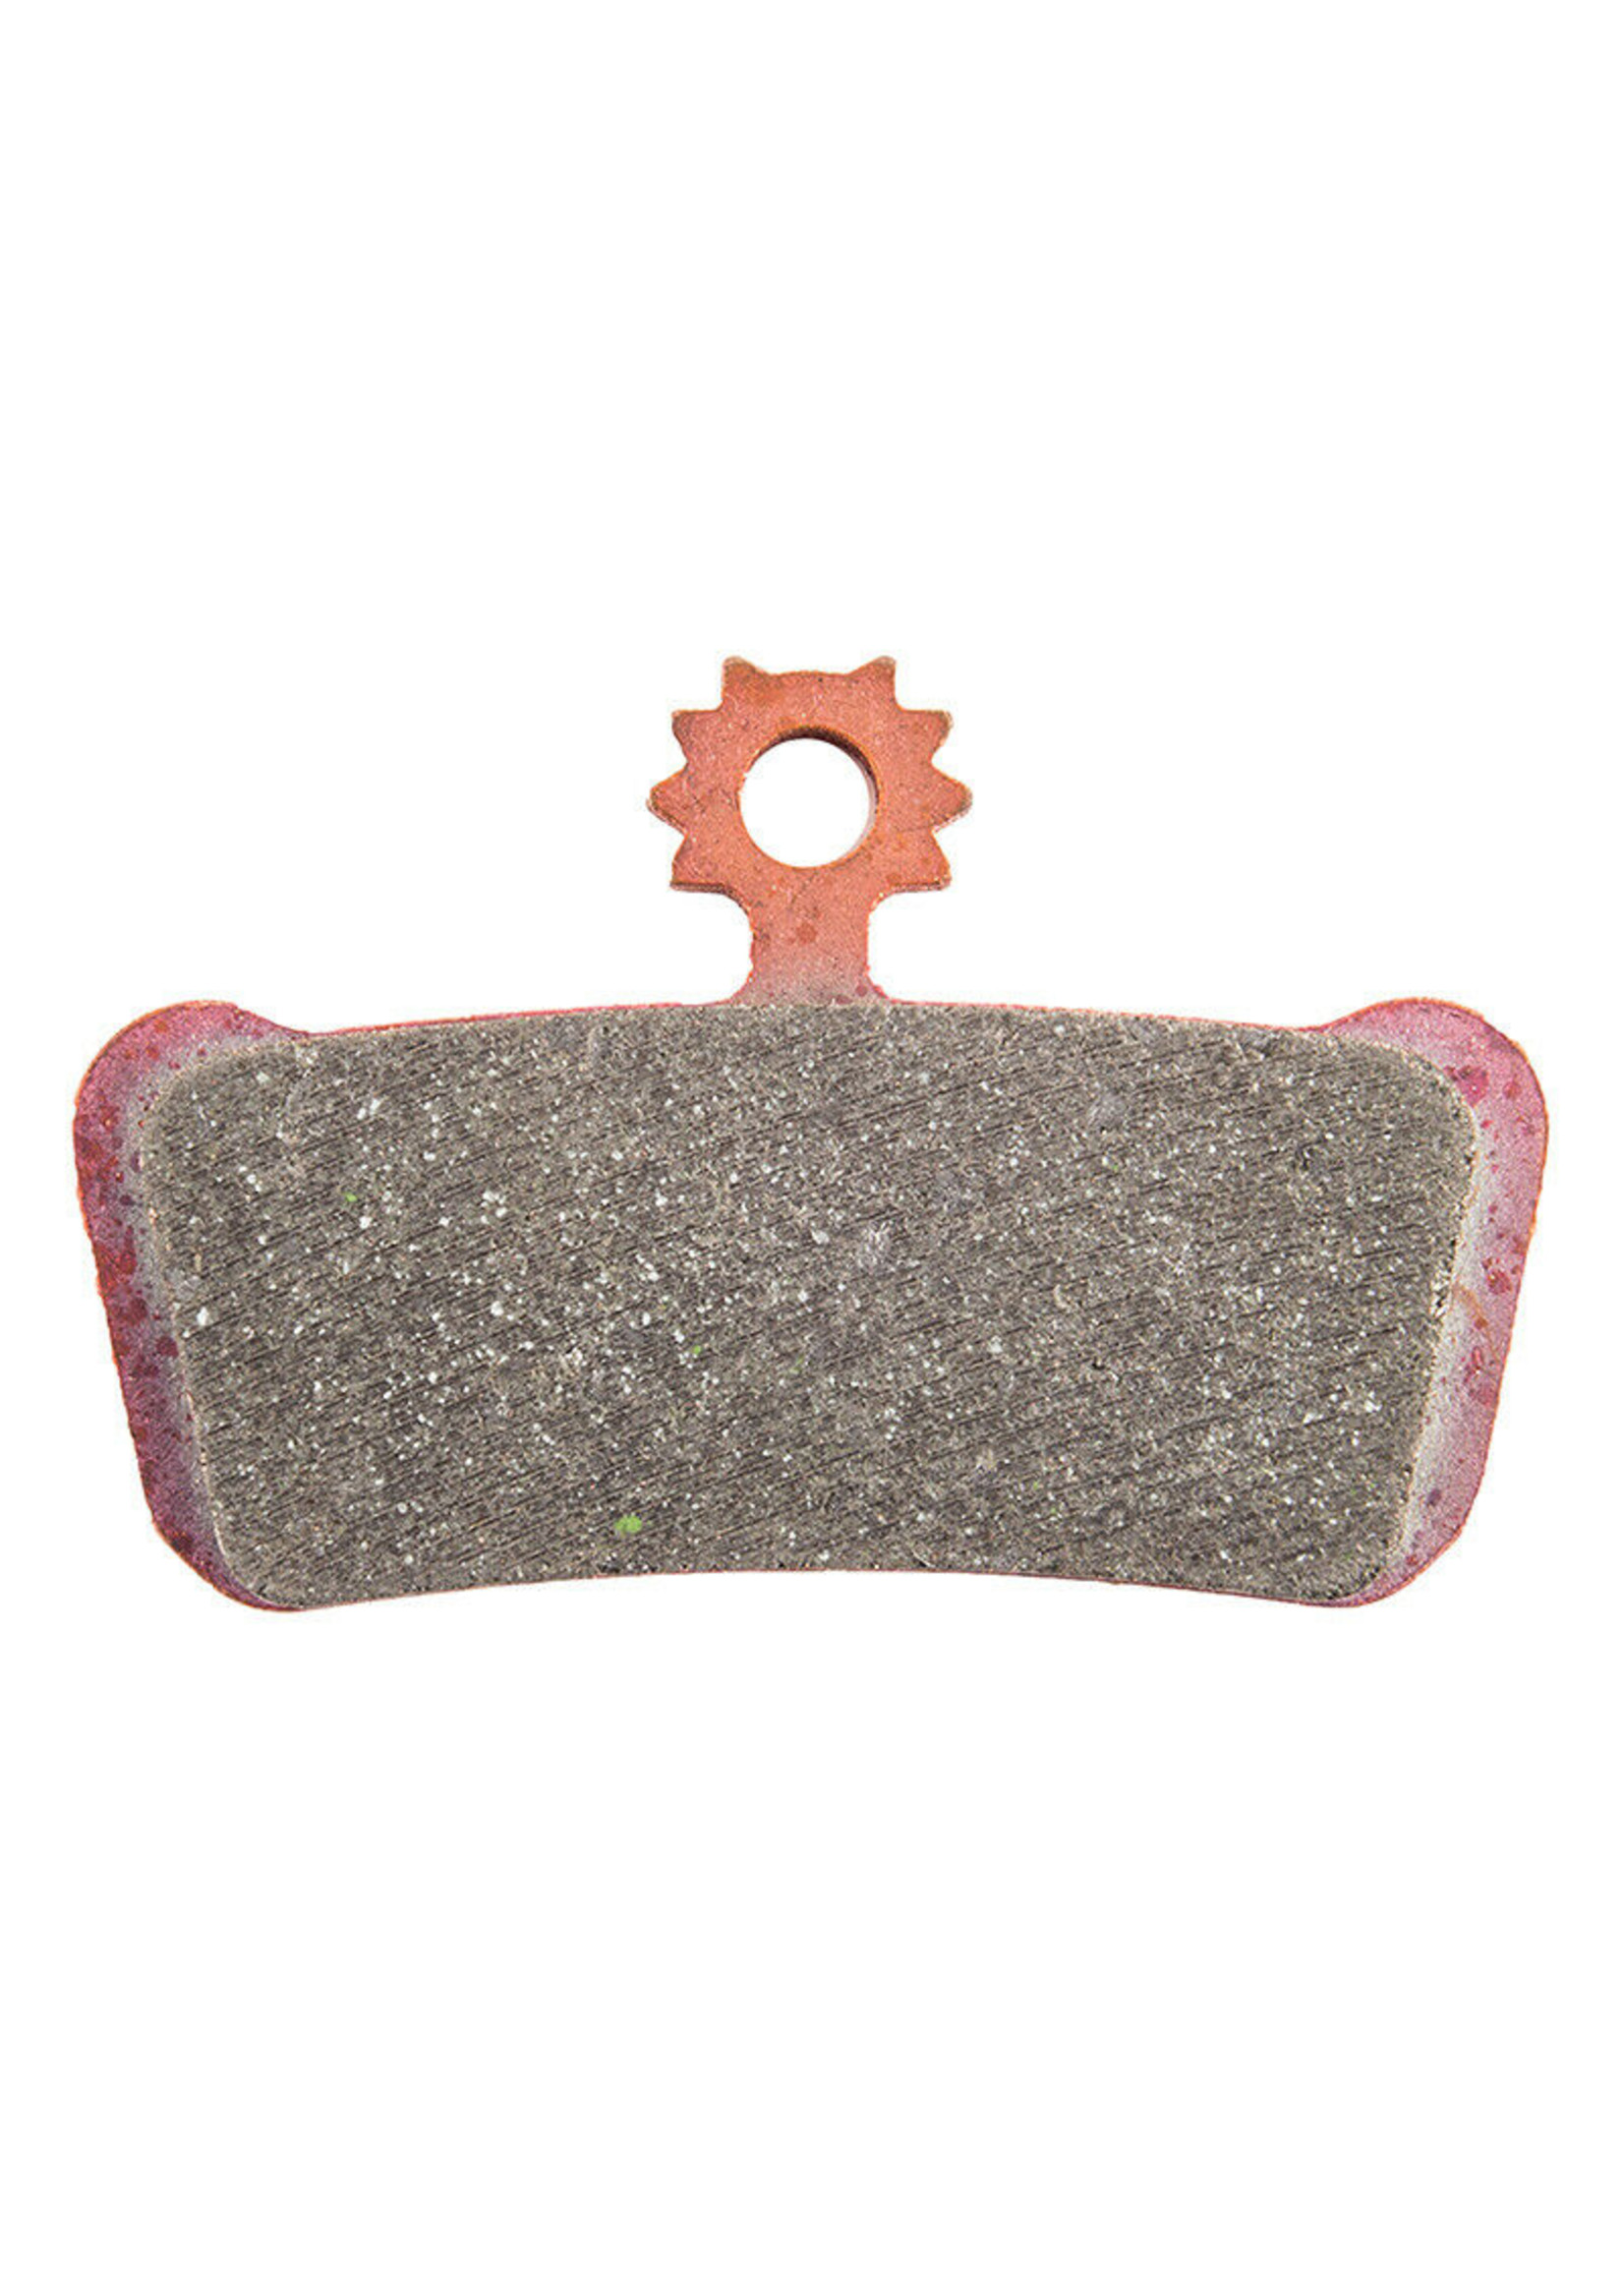 Kool-Stop Kool-Stop Disc Brake Pad for Avid/SRAM - Sintered, Copper Plated Backplate, Fits SRAM Guide, Avid XO/Elixir Trail